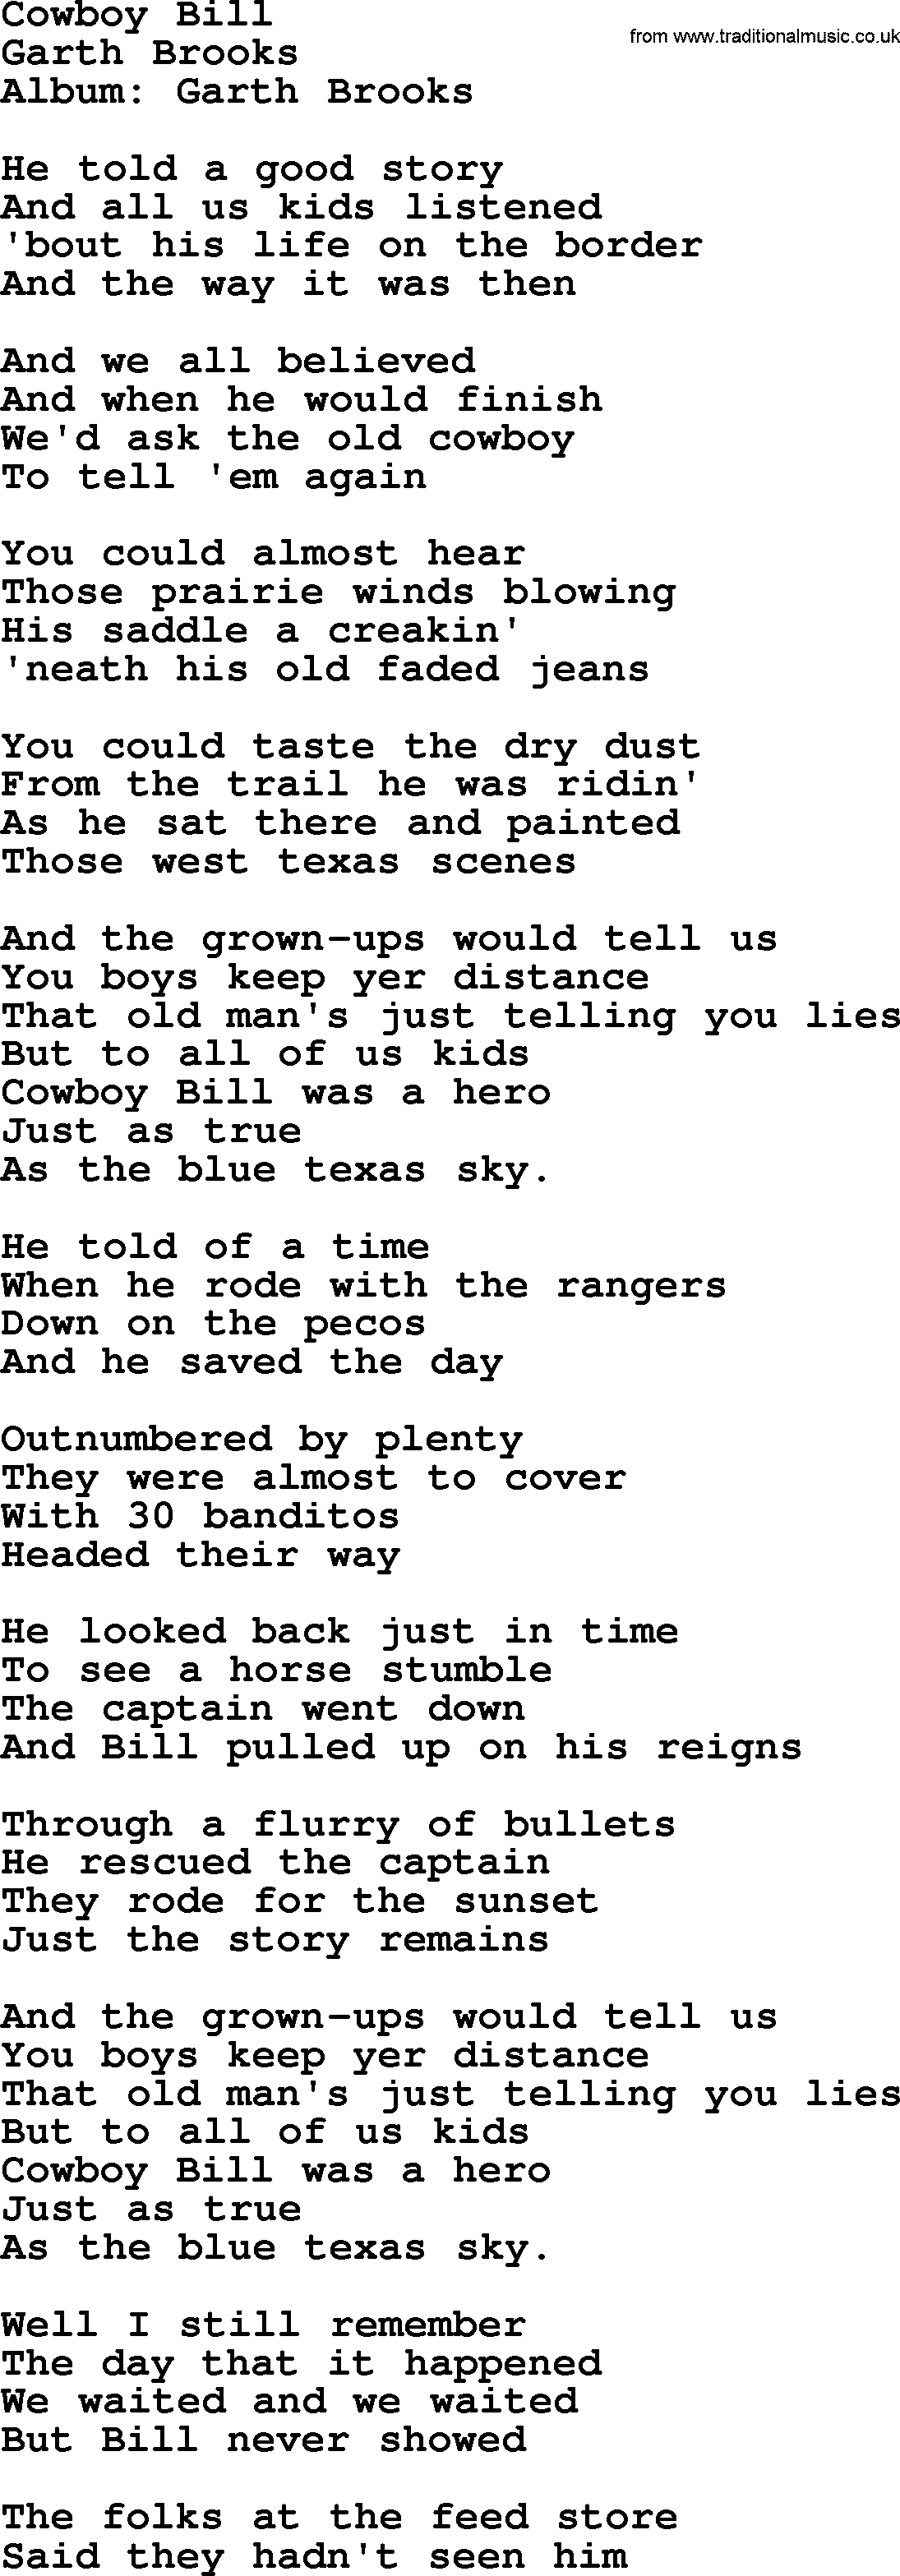 Garth Brooks song: Cowboy Bill, lyrics